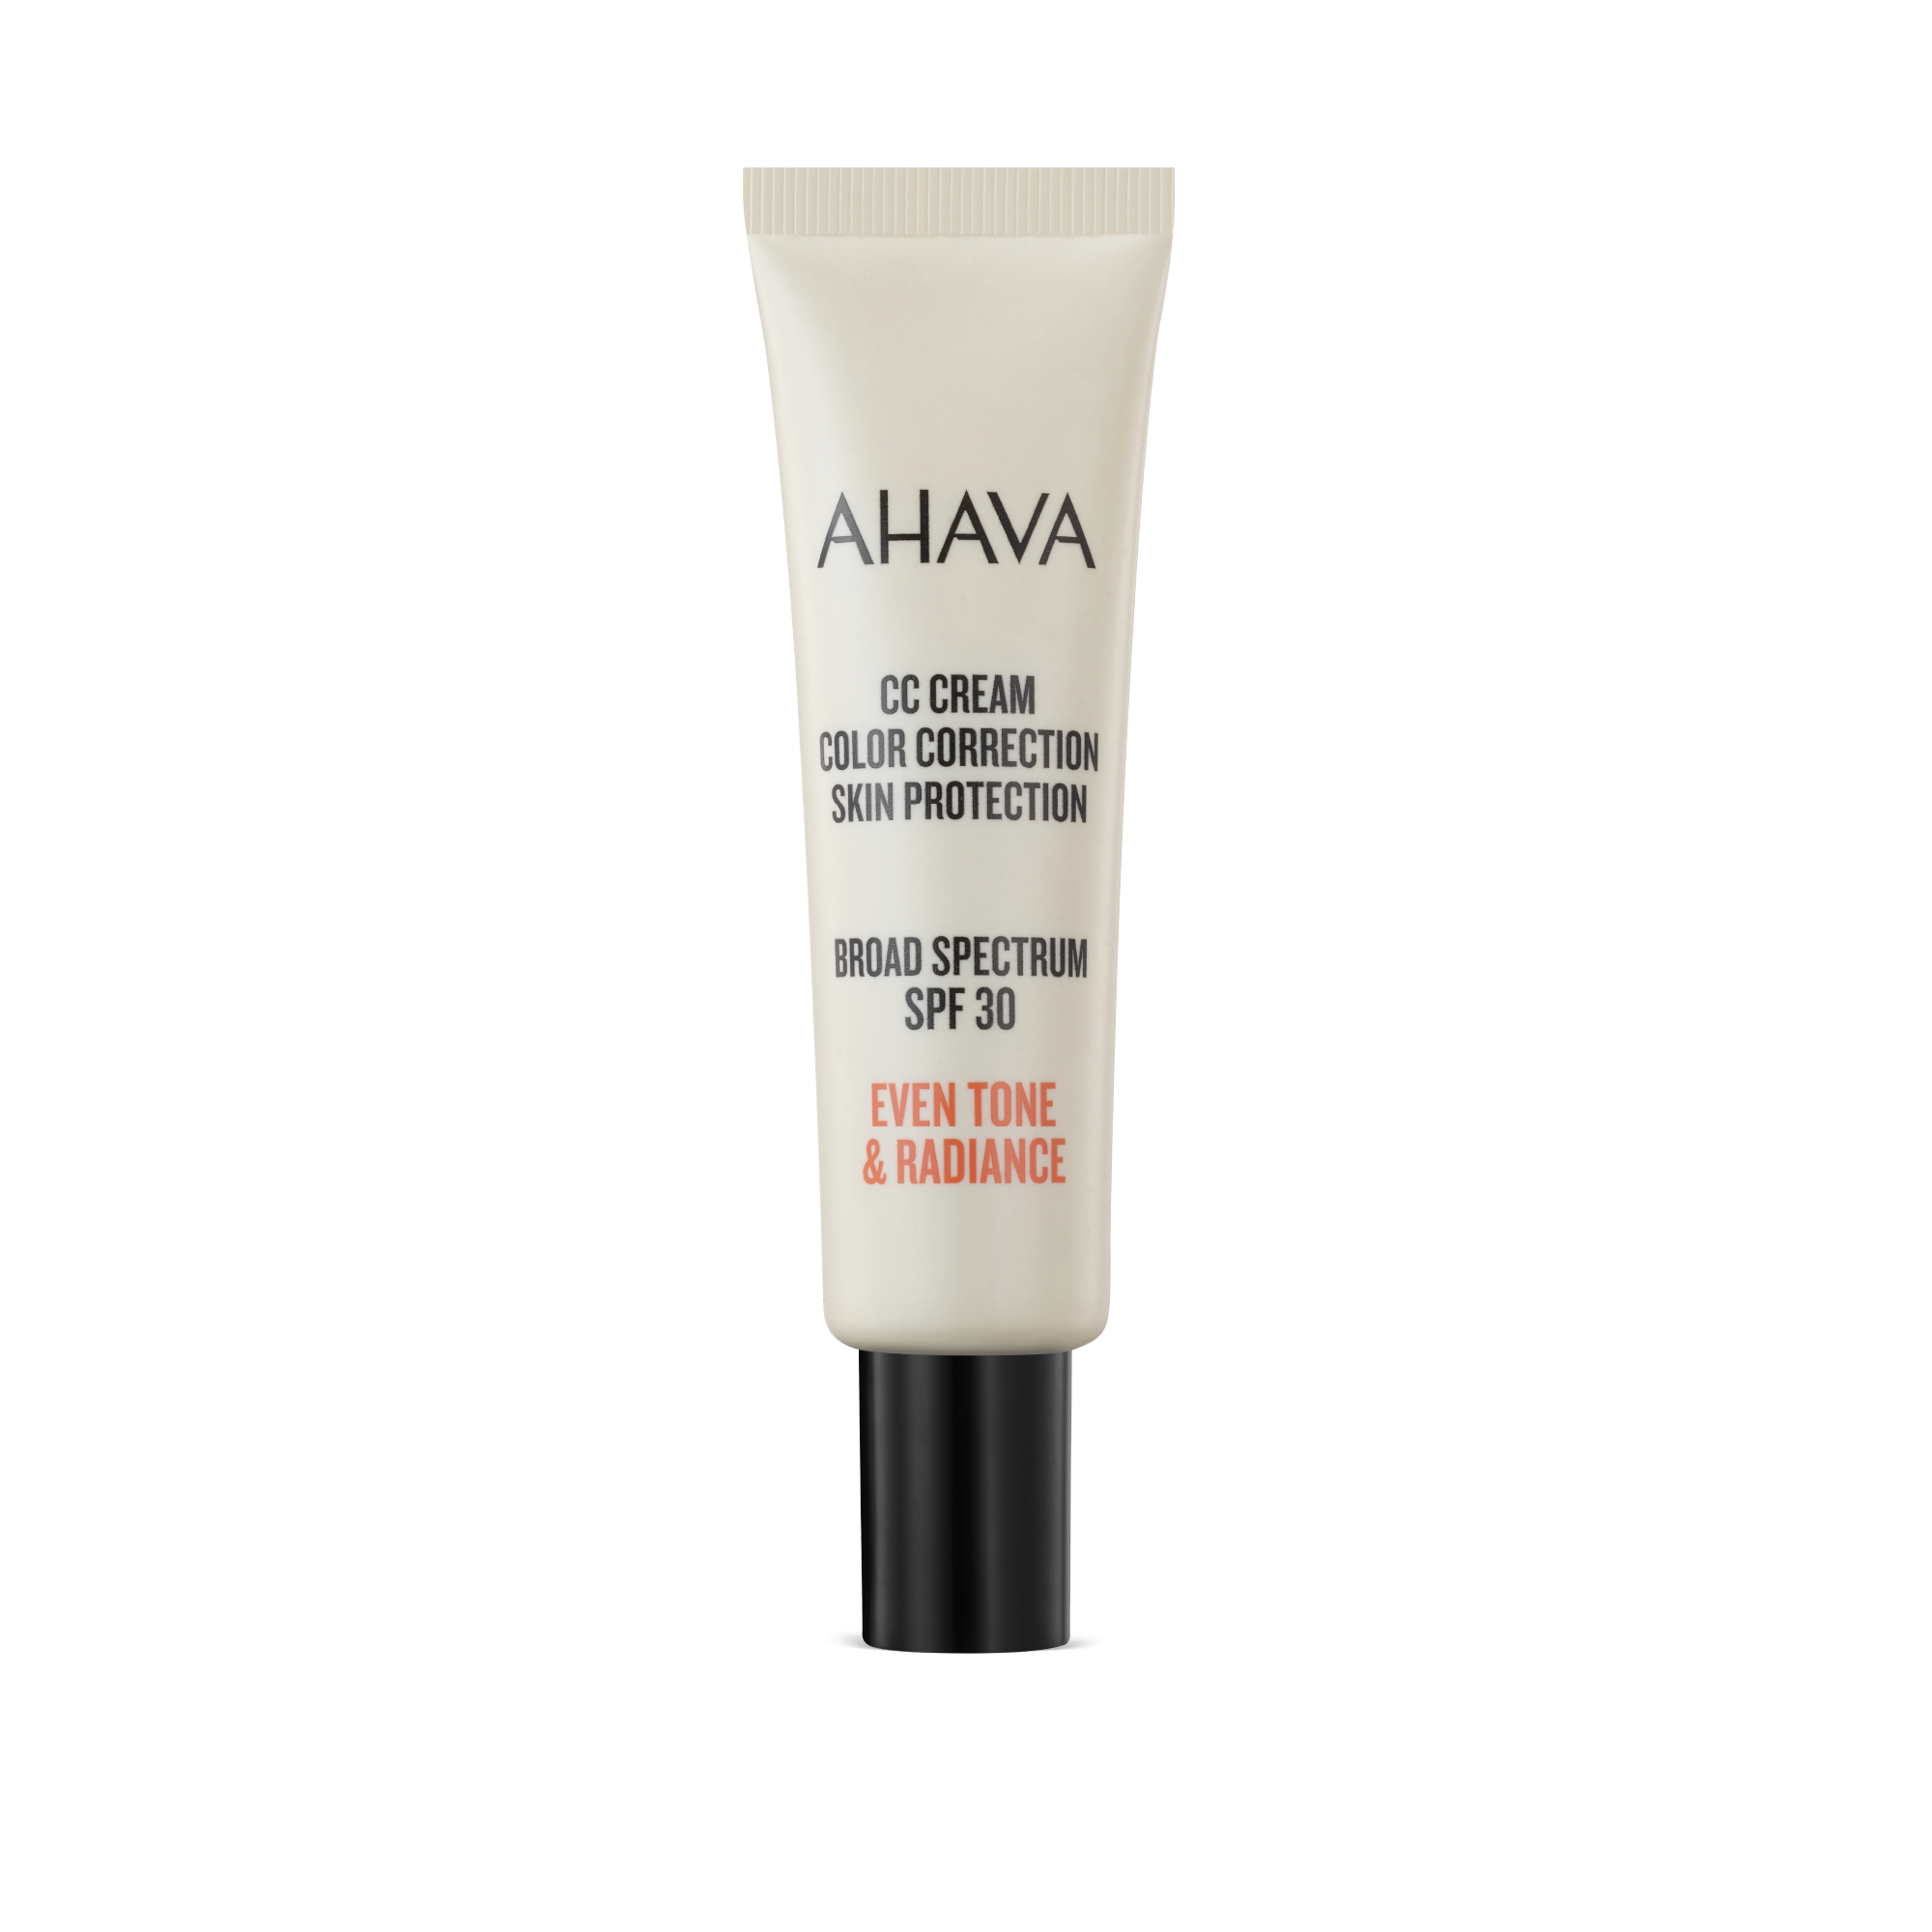 Ahava CC Cream Color Correction Skin Protection SPF 30 1 oz.